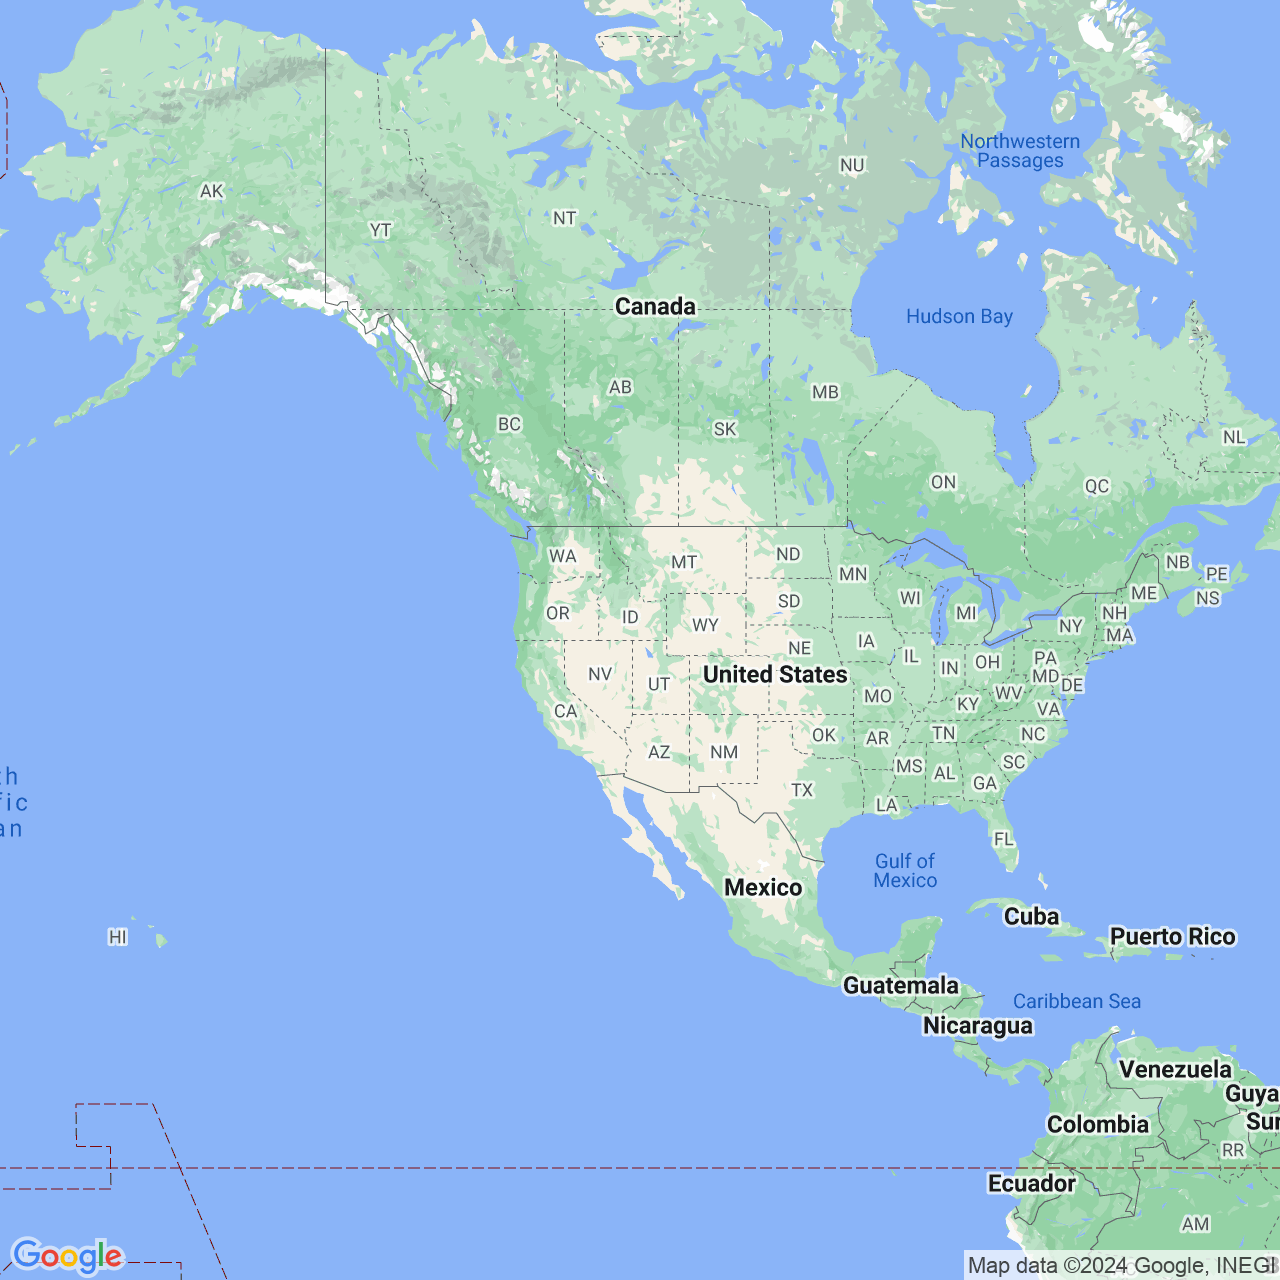 Google Maps Static Image